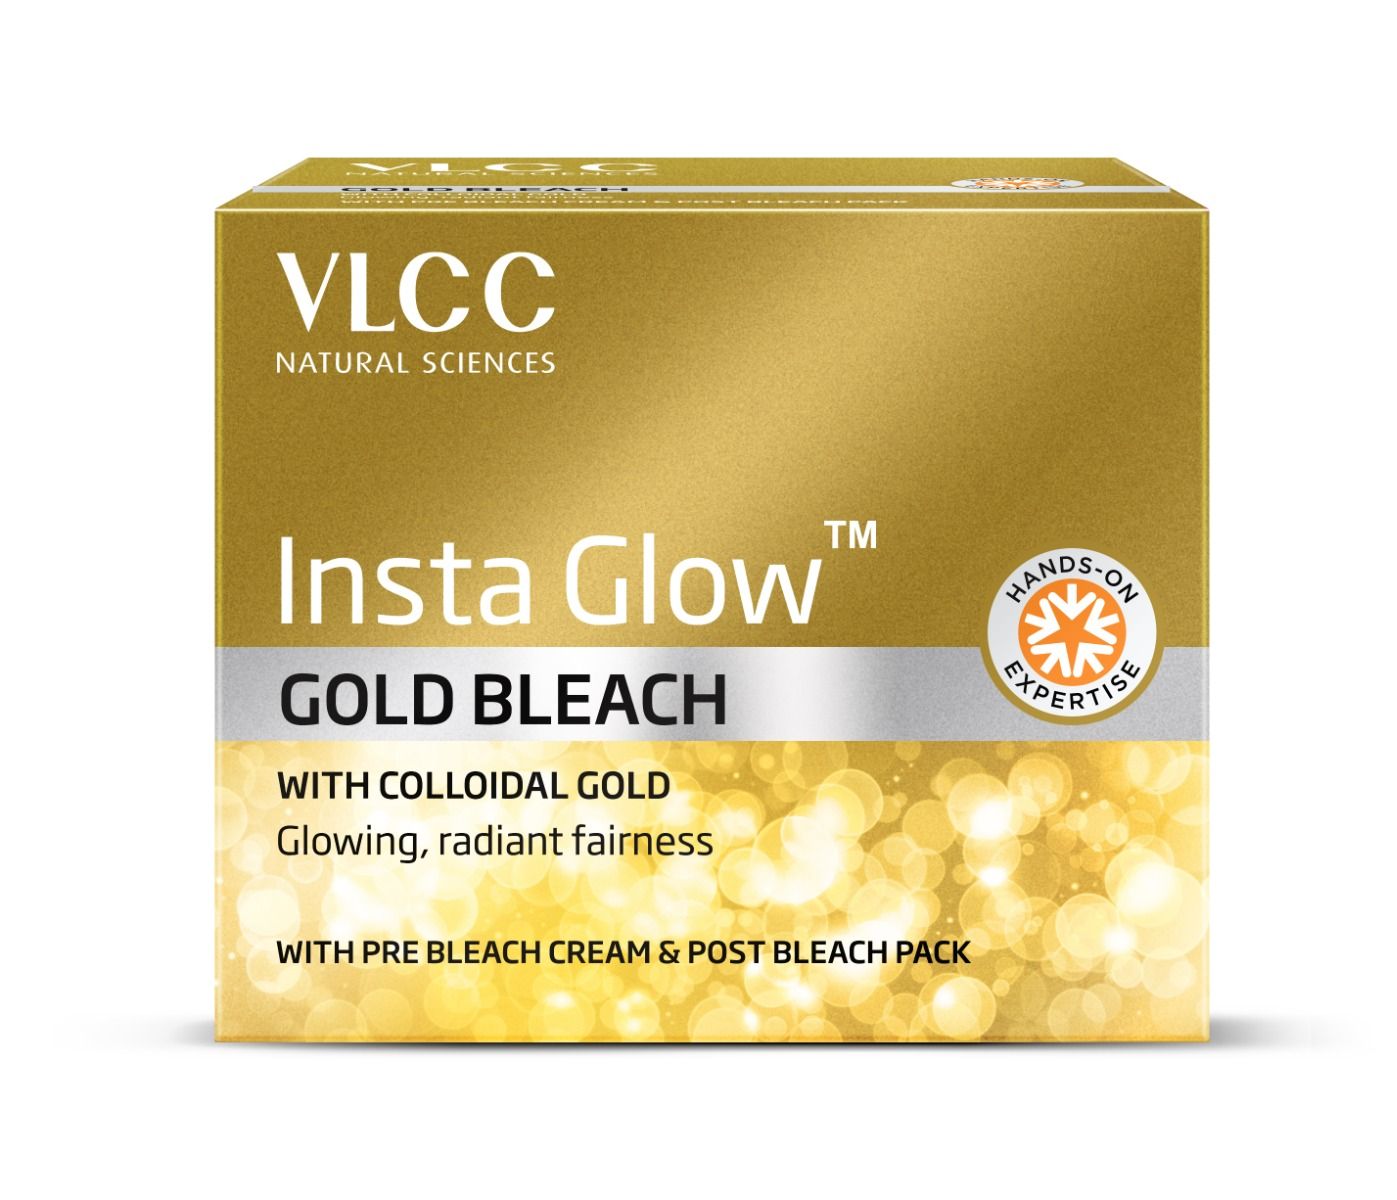 VLCC Insta Glow Gold Bleach, 30 gm, Pack of 1 